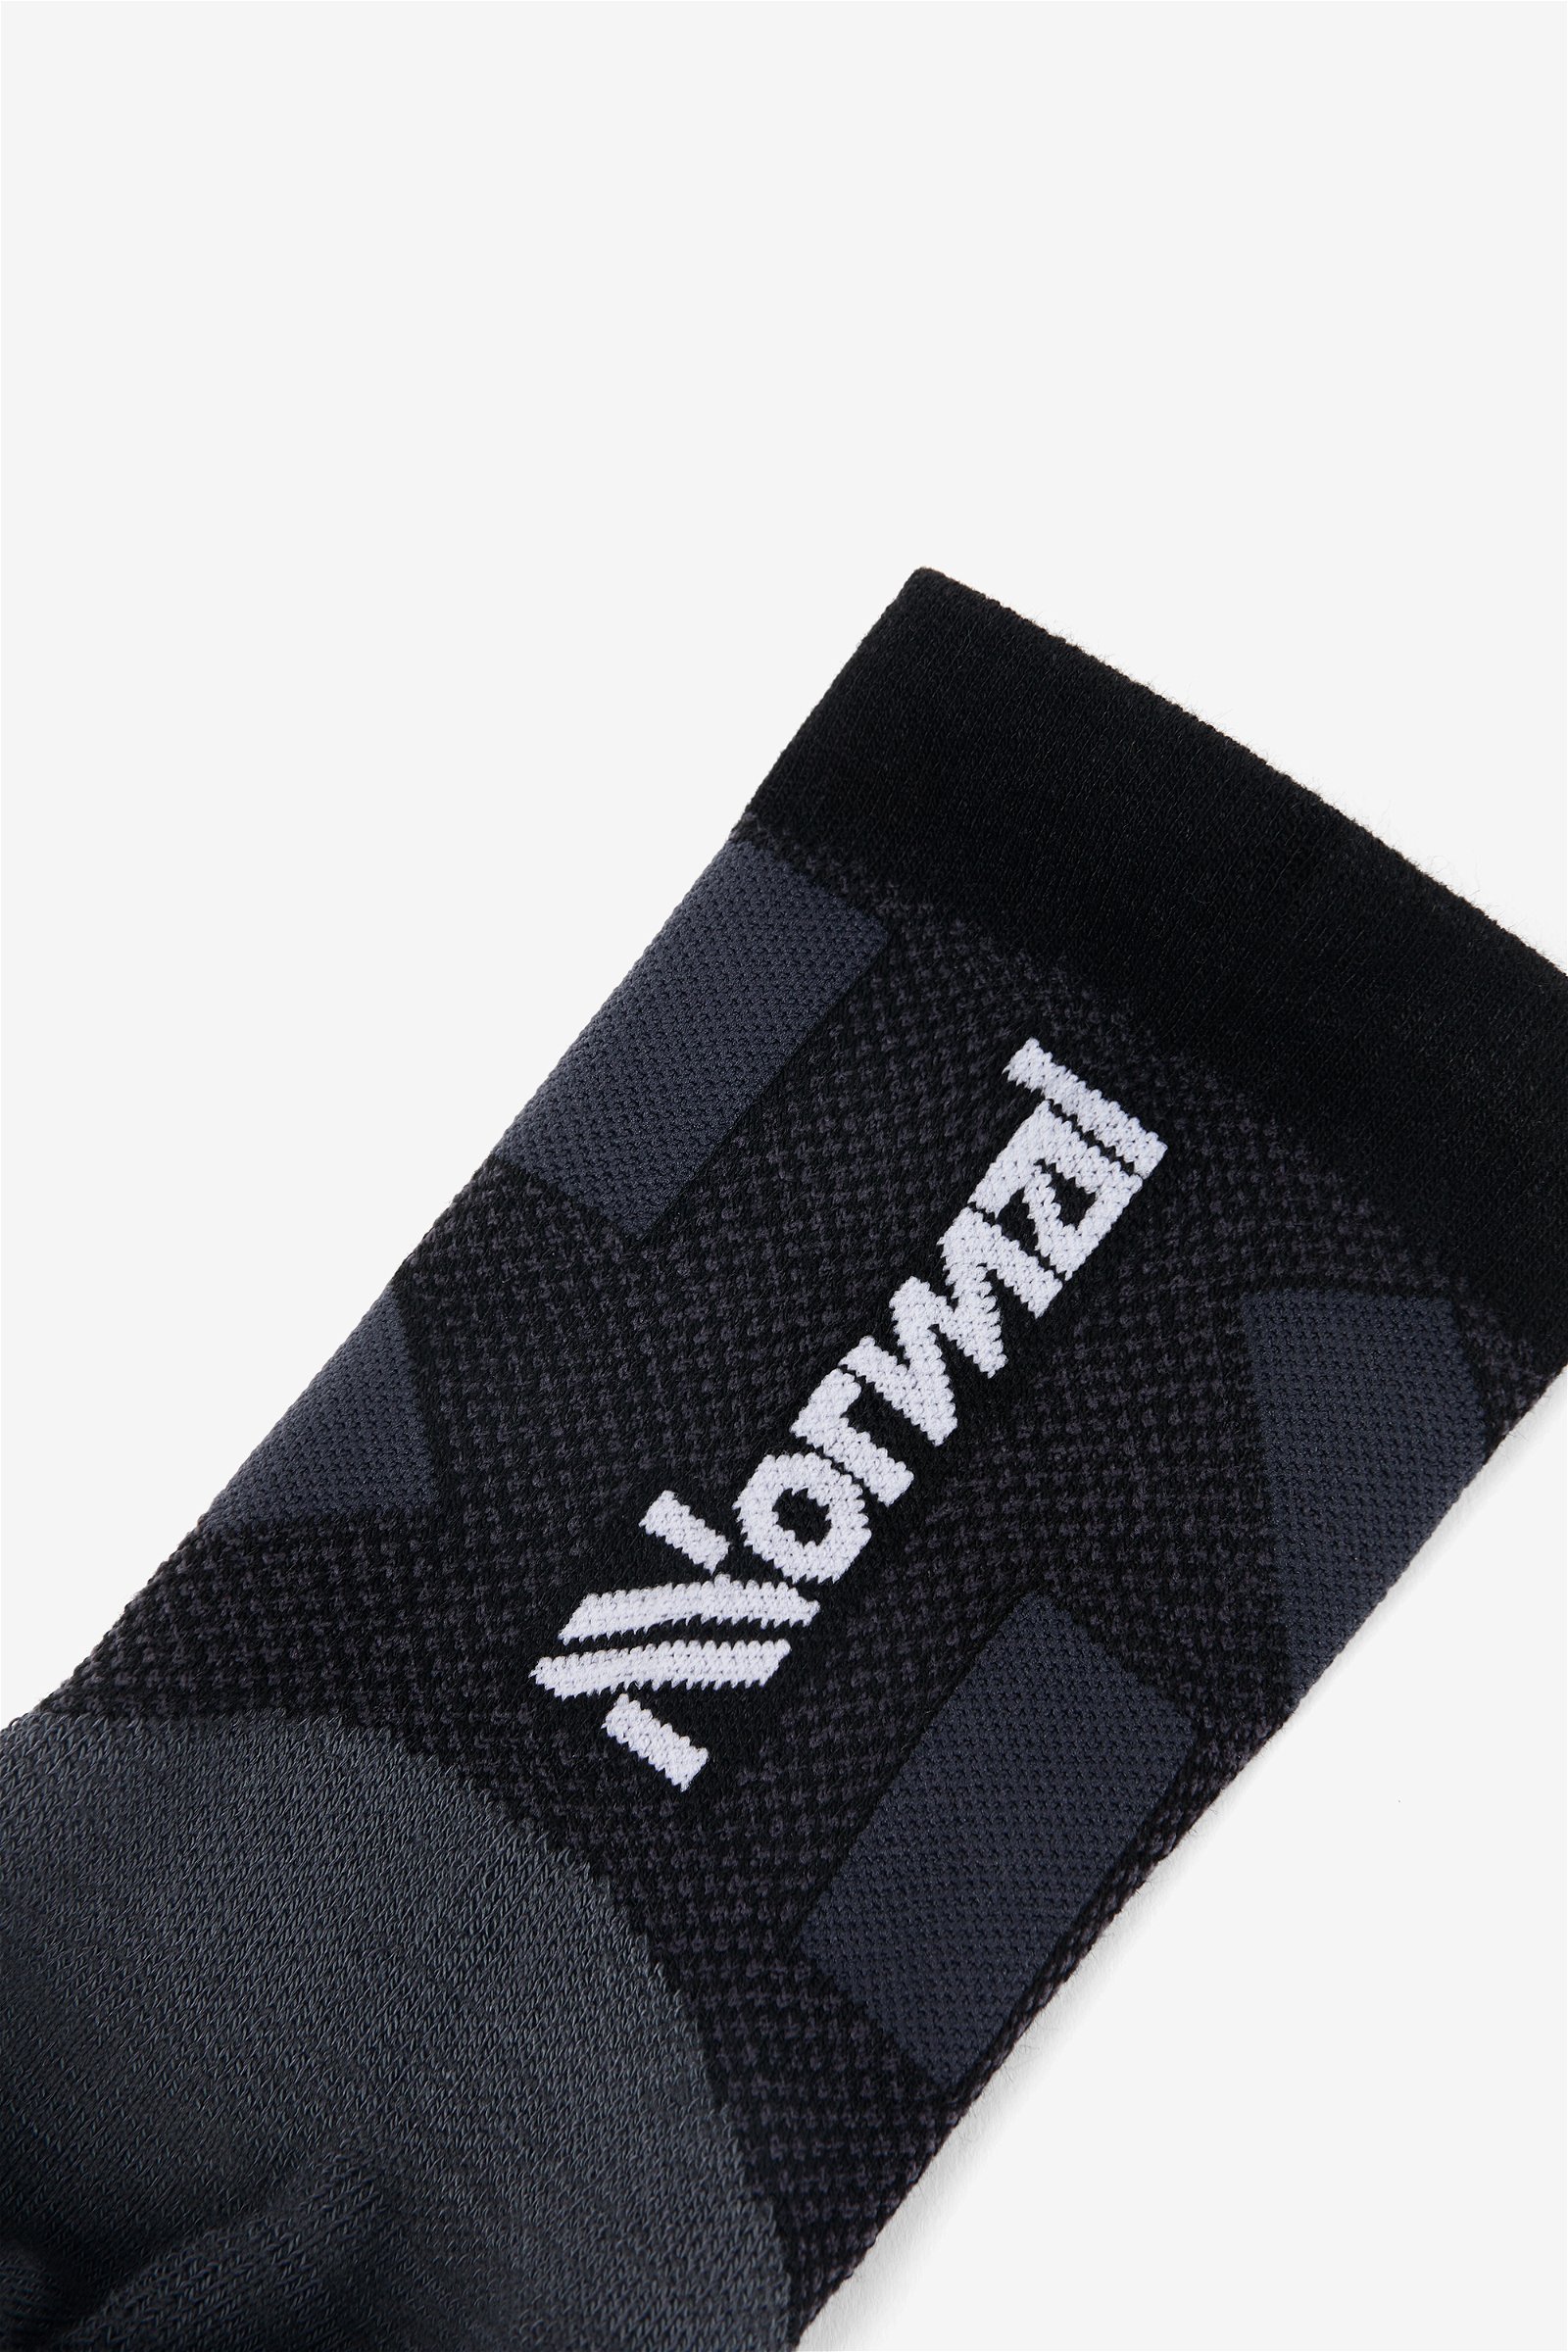 NNormal Race Sock Low Cut